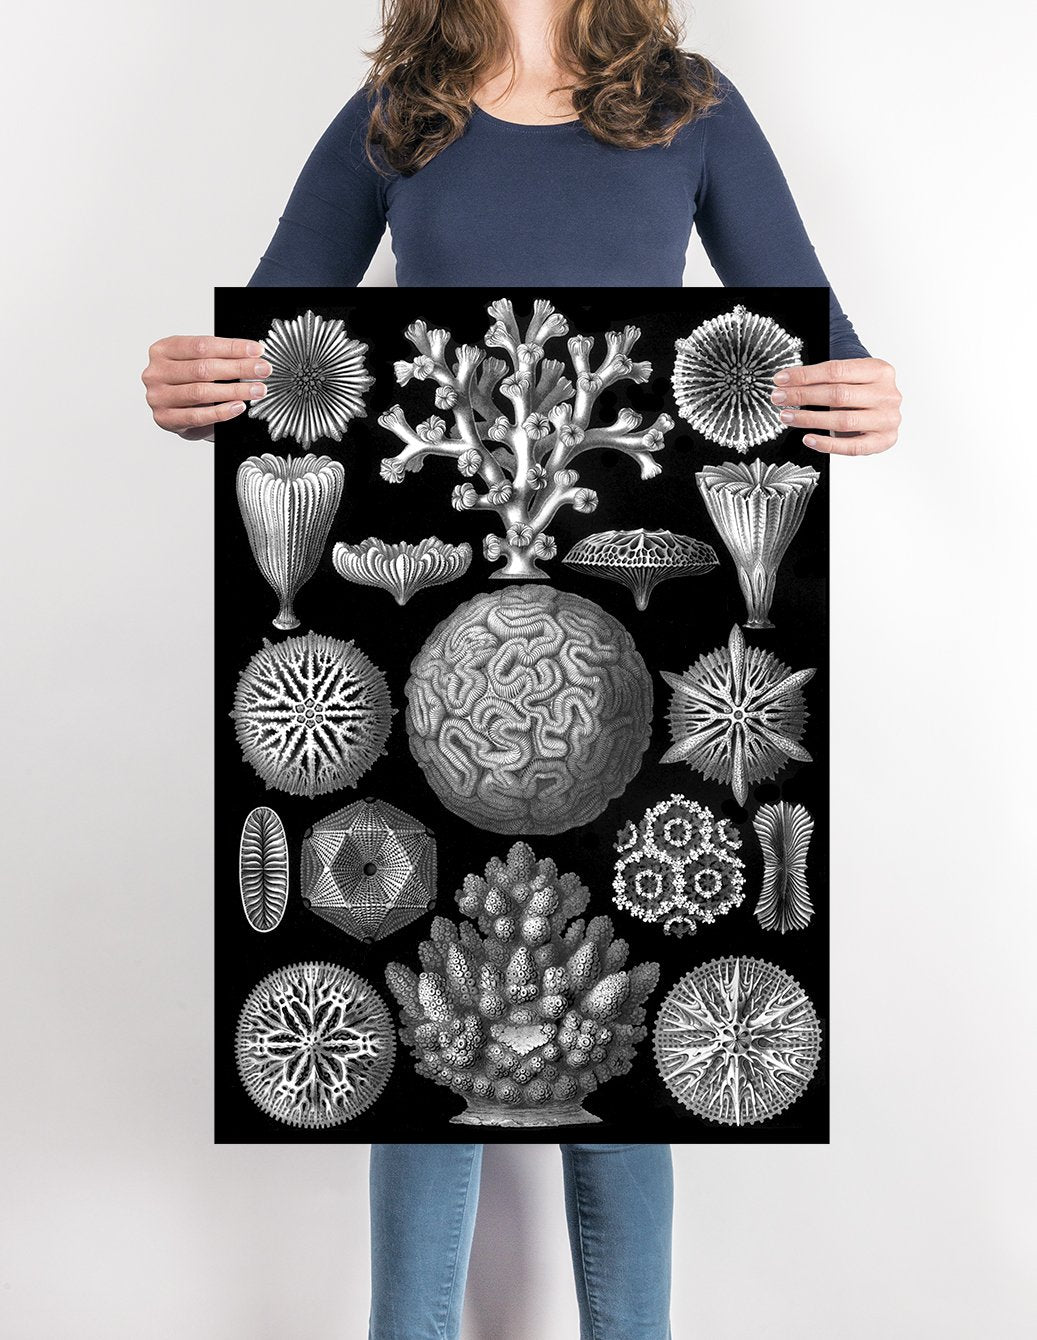 Mycetozoa by Ernest Haeckel Poster